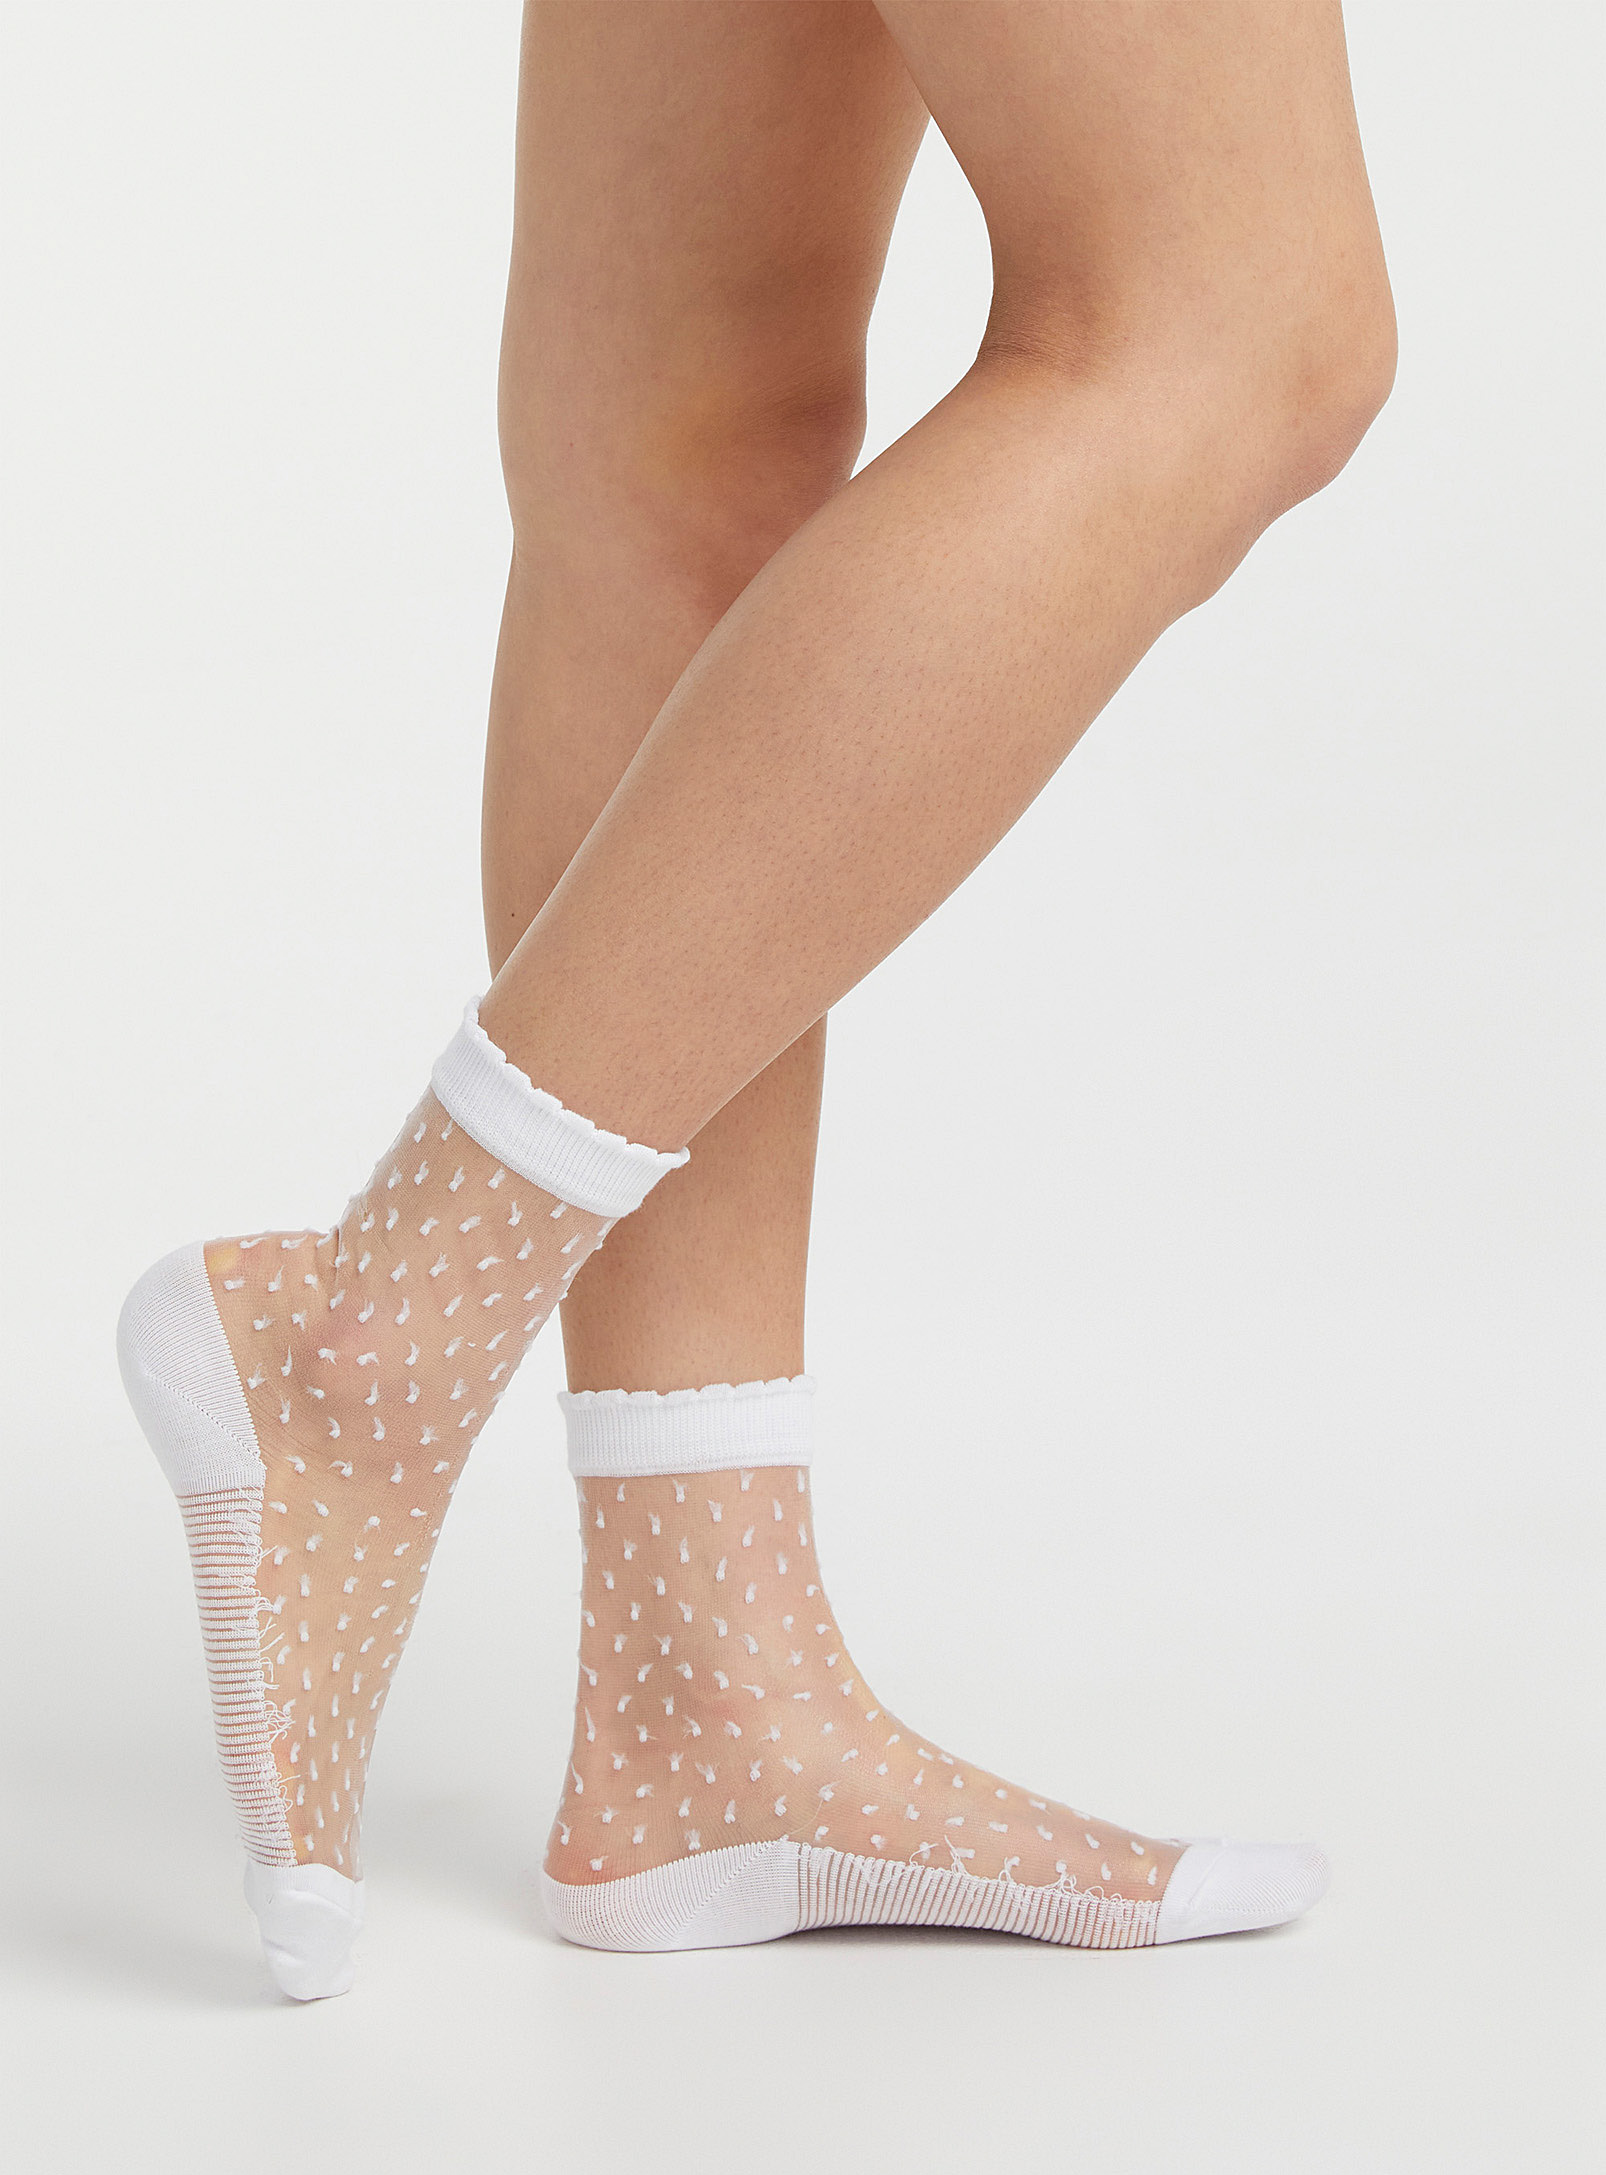 Mini-pattern sheer socks